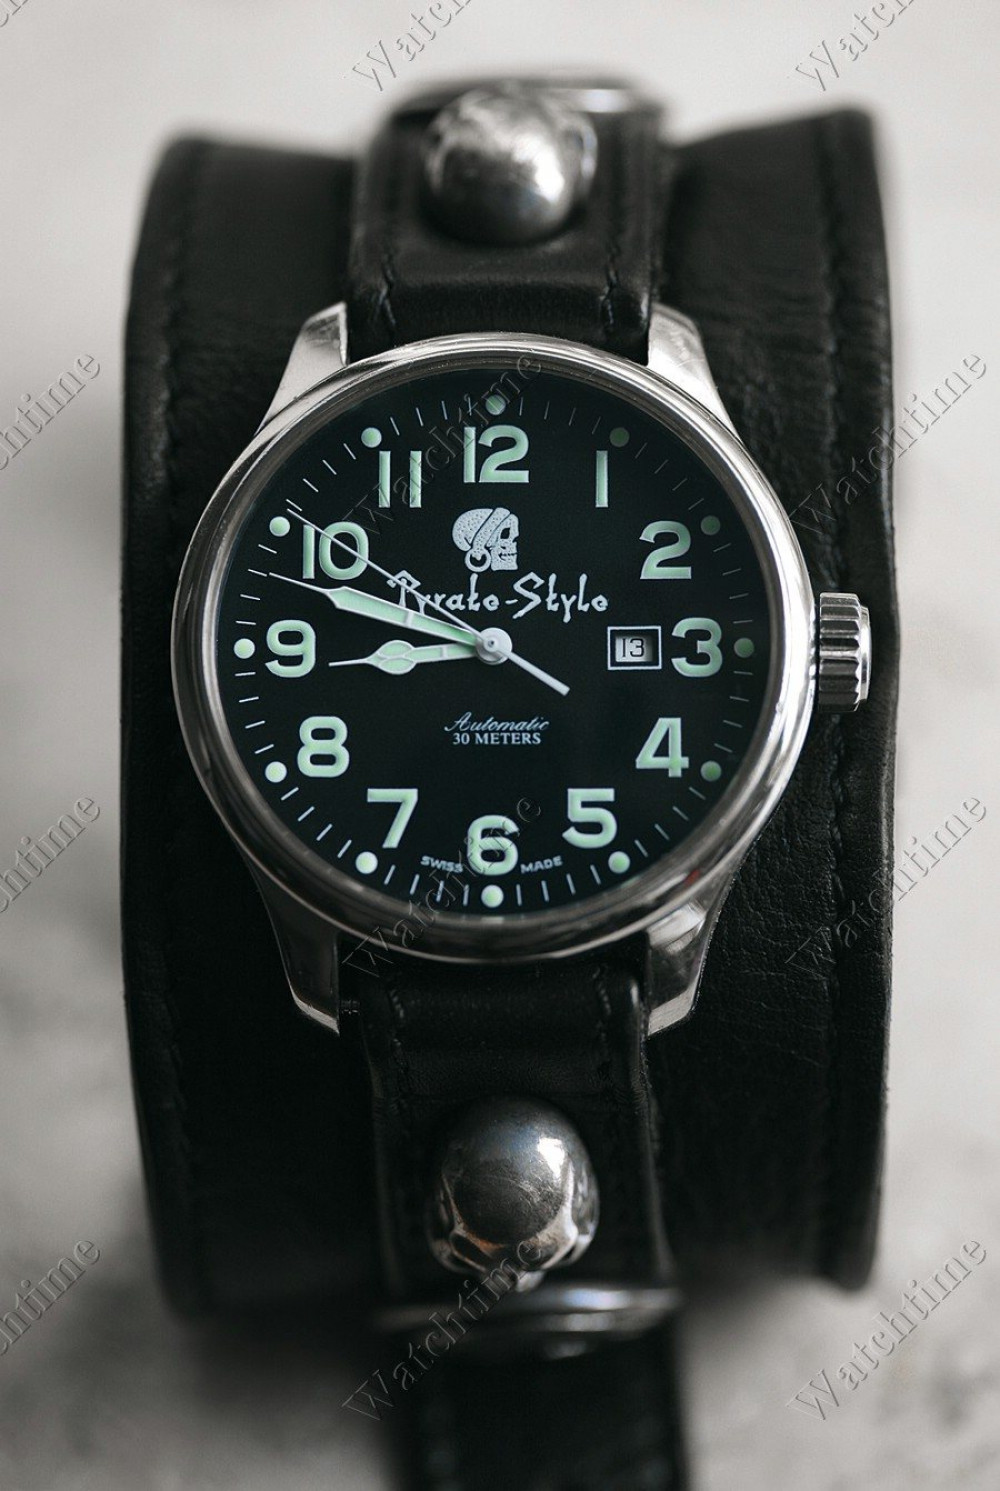 Zegarek firmy Pyrate Style, model Automatik